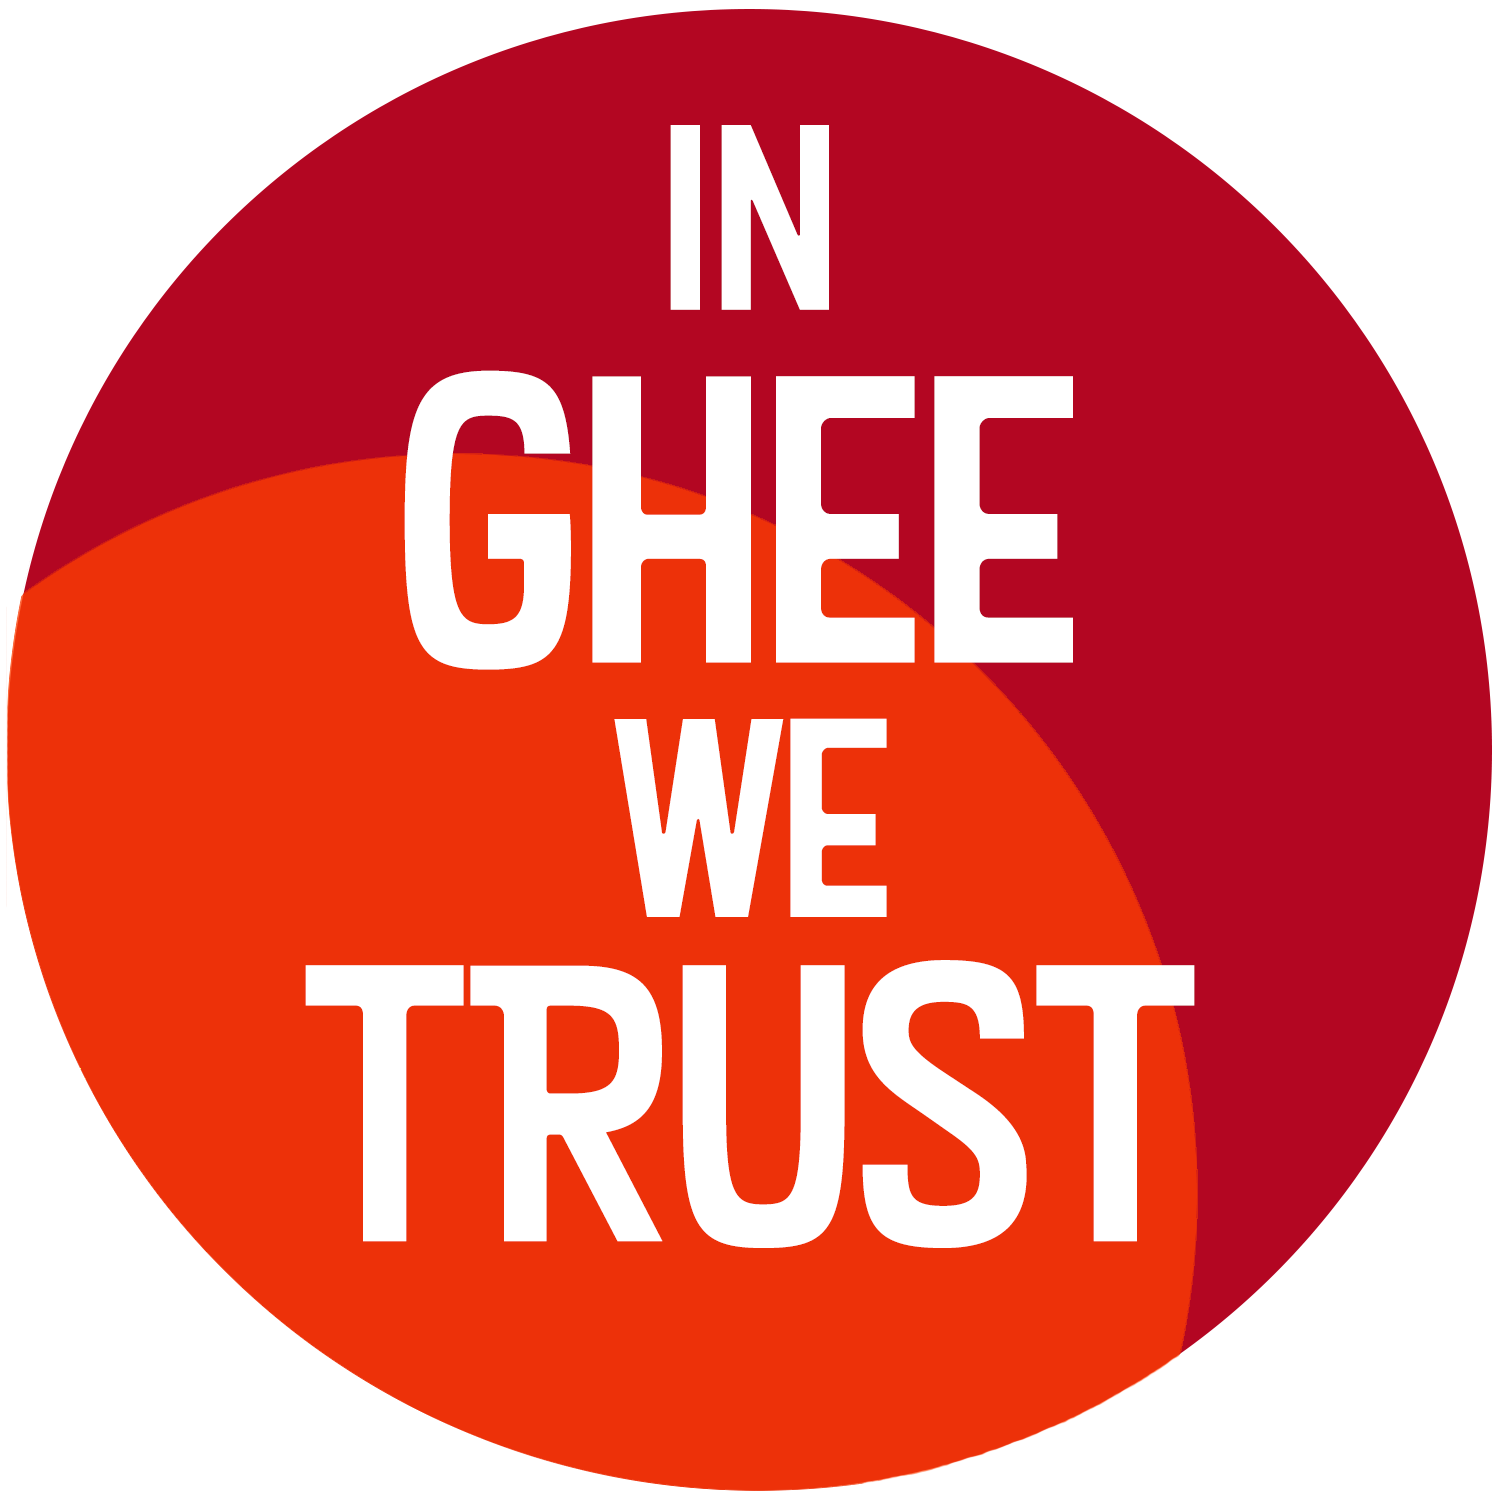 In Ghee we Trust